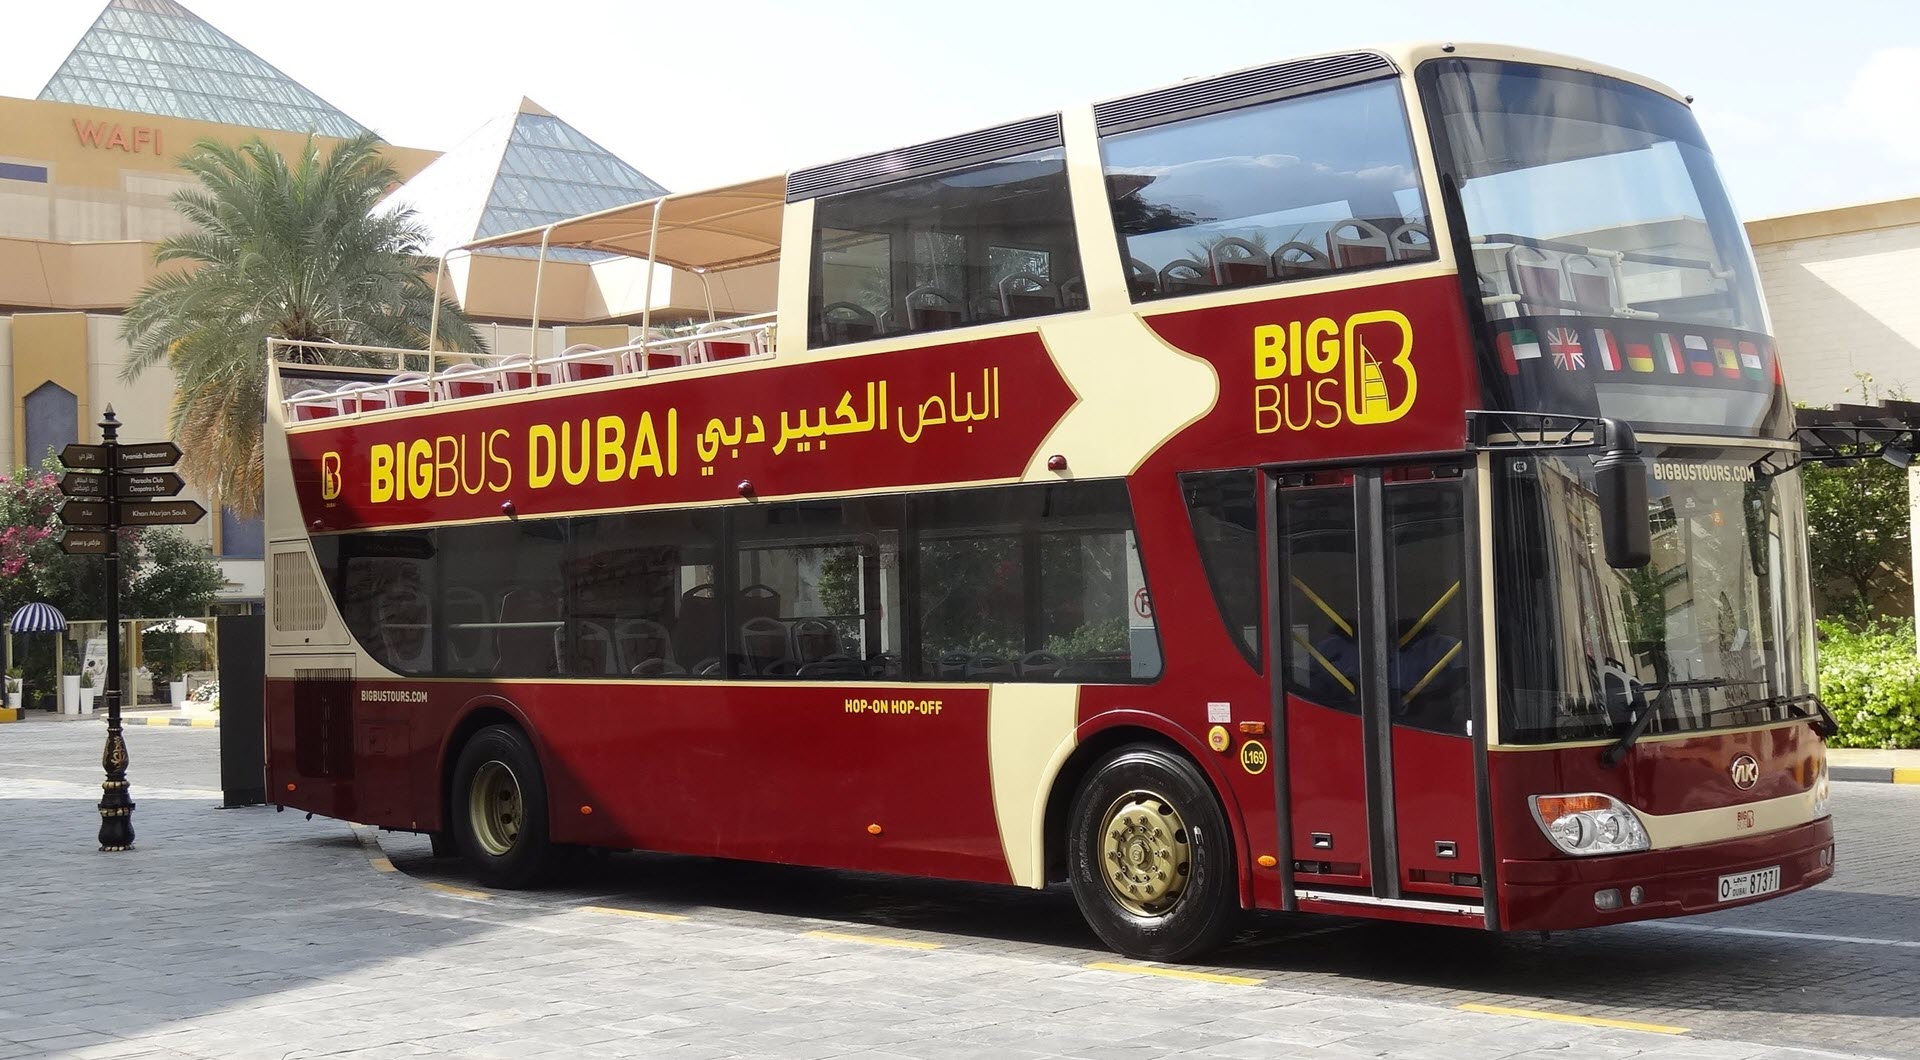 Big bus tour Dubai Classic Ticket rates